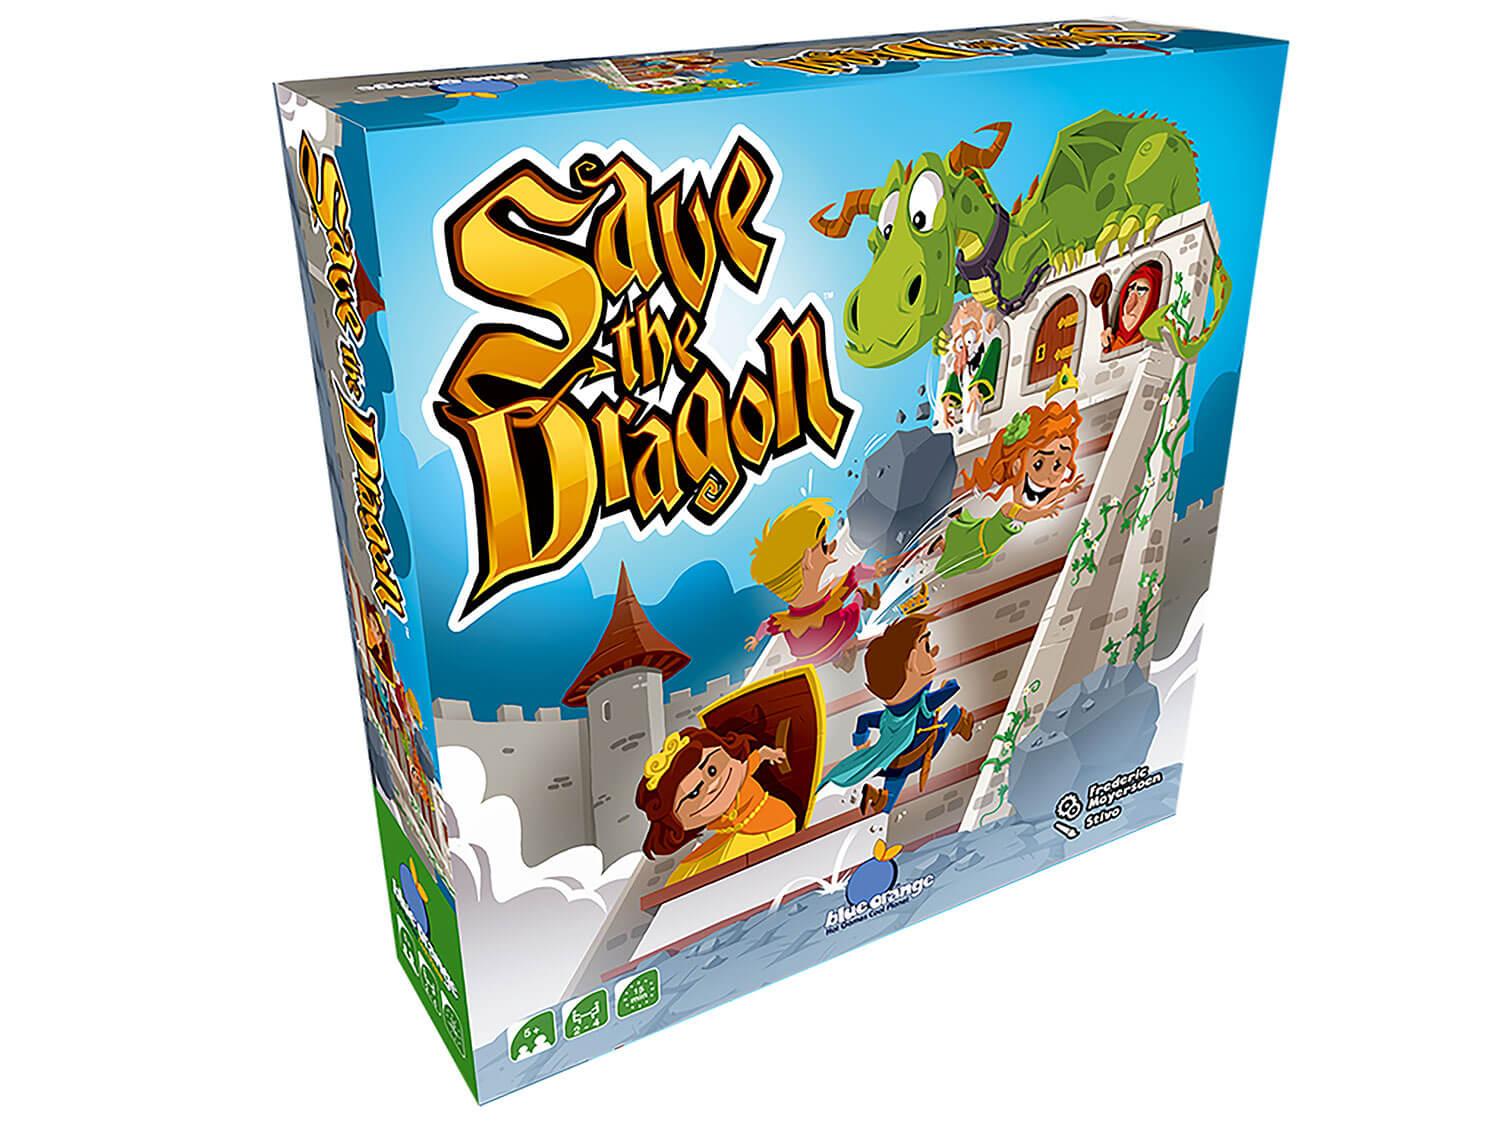 Save The Dragon 3D Box